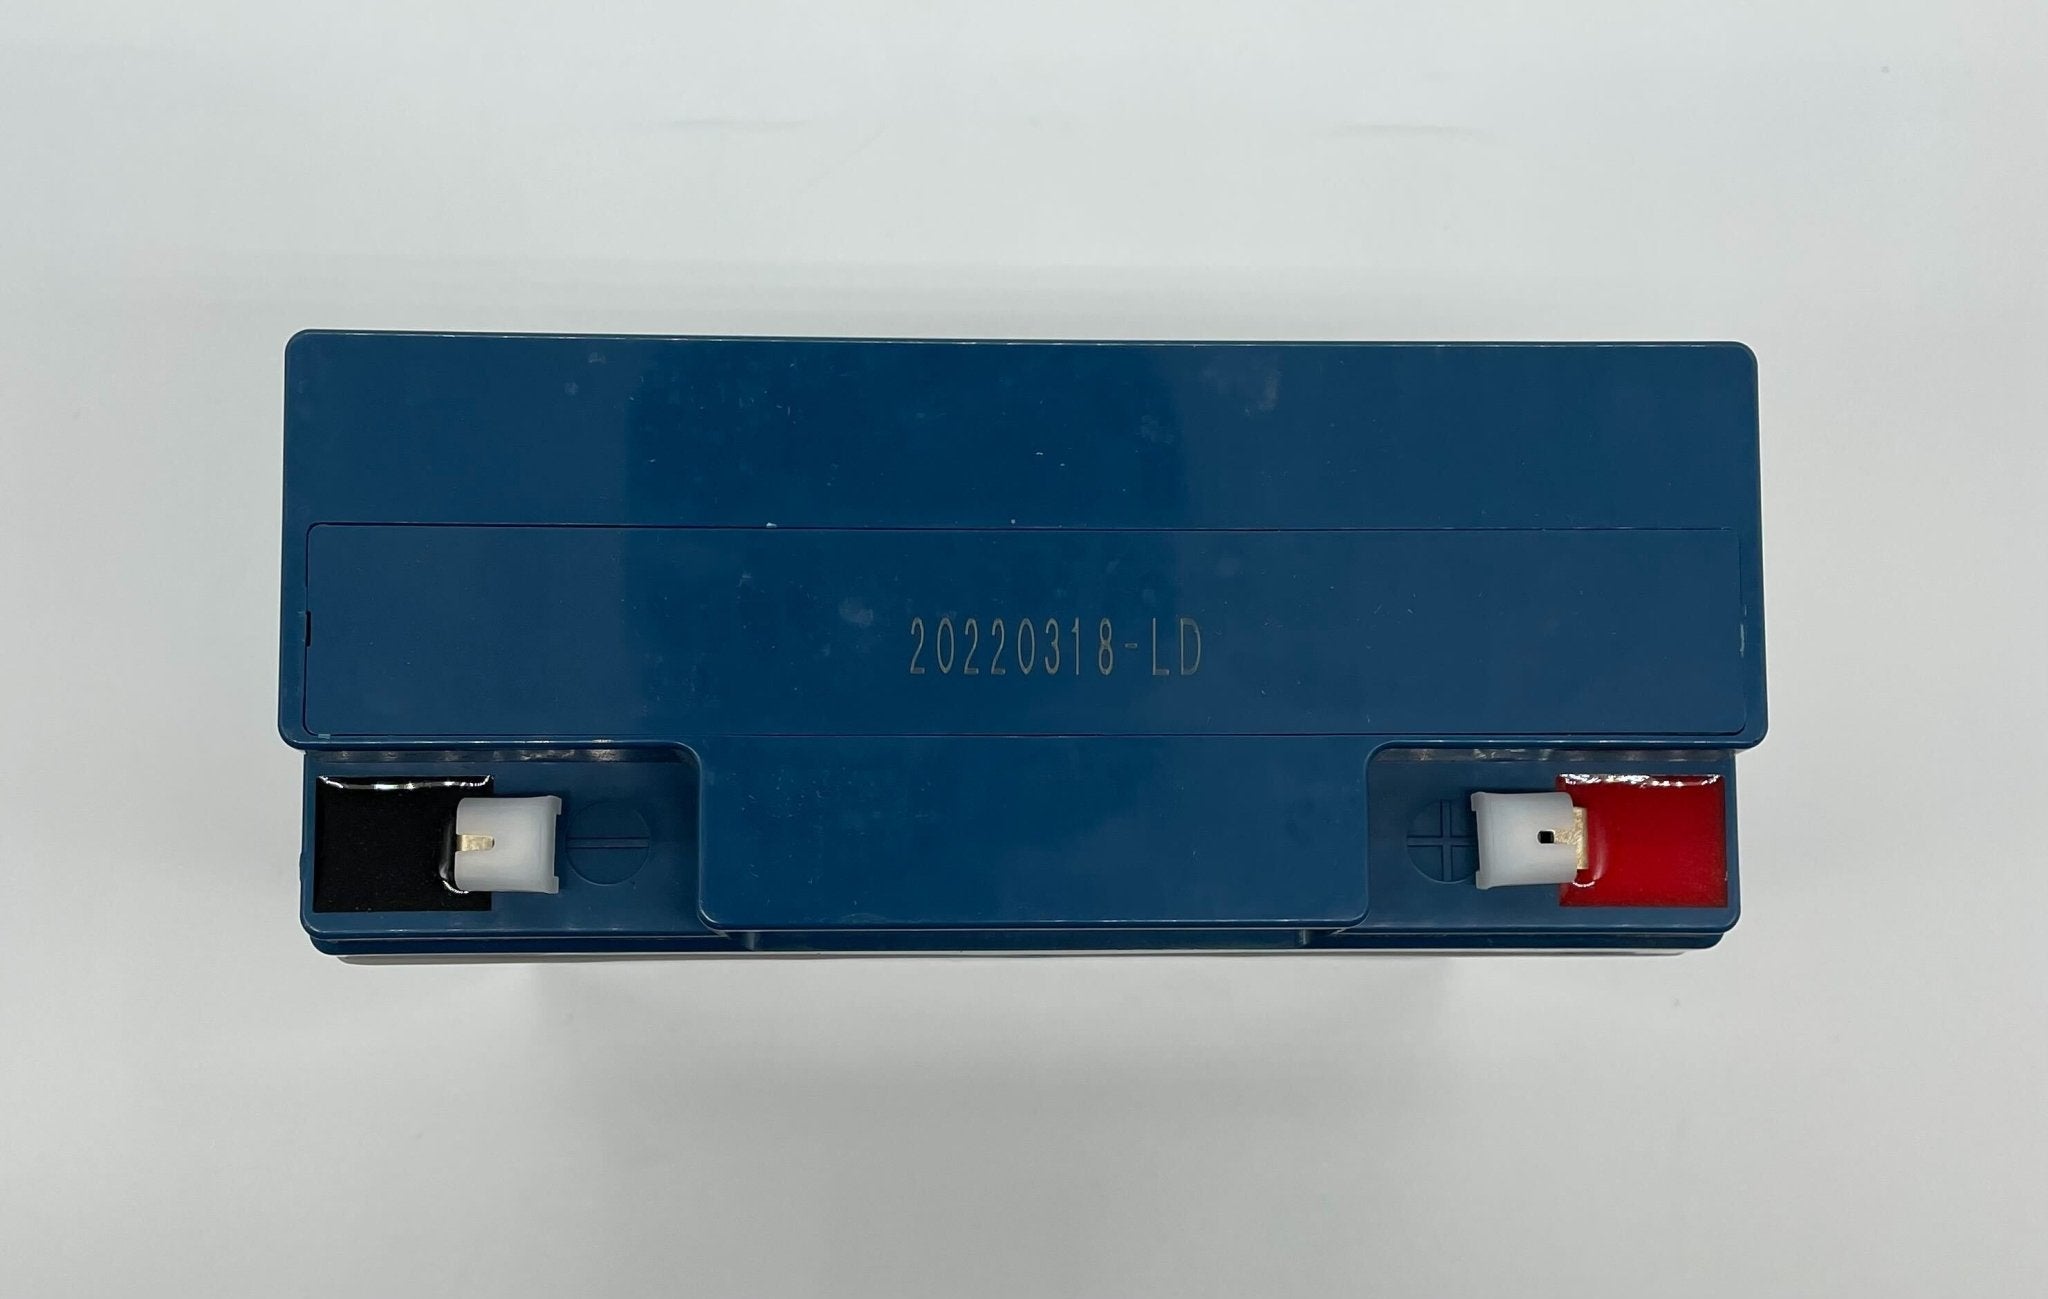 Firelite BAT-12180-BP - The Fire Alarm Supplier